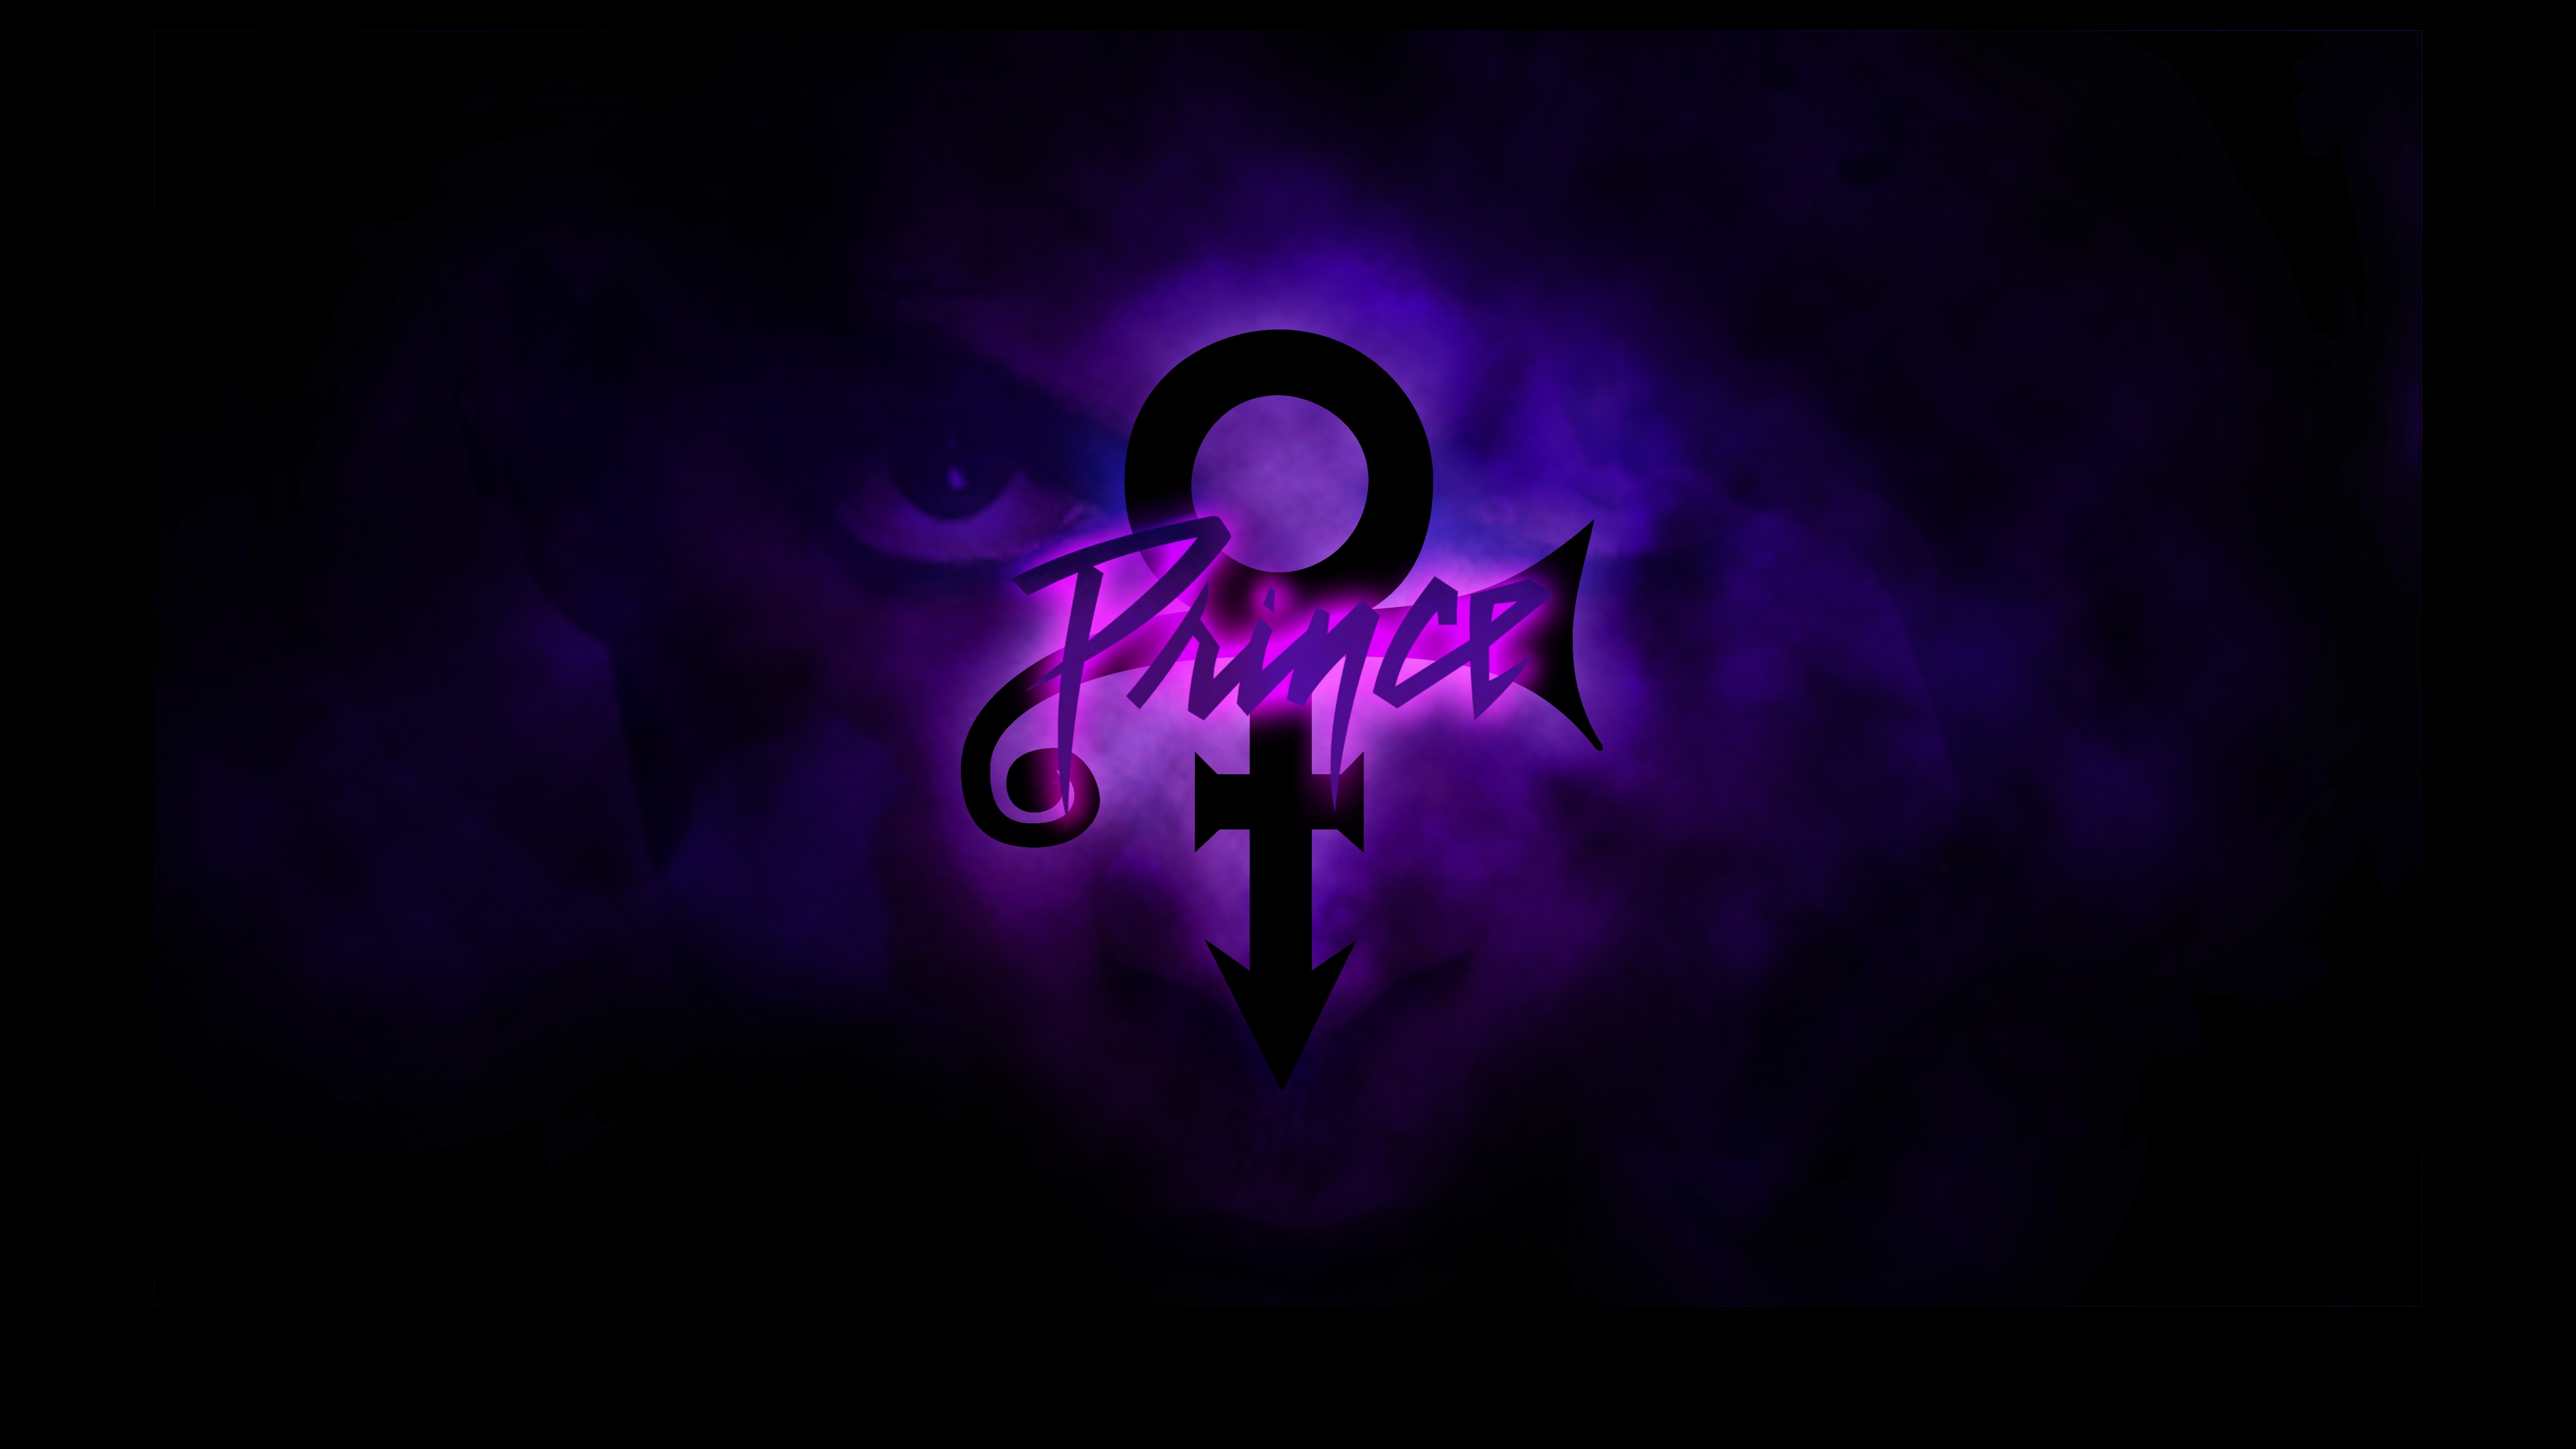 General 4096x2304 Prince Lovesymbol musician purple background low light digital art